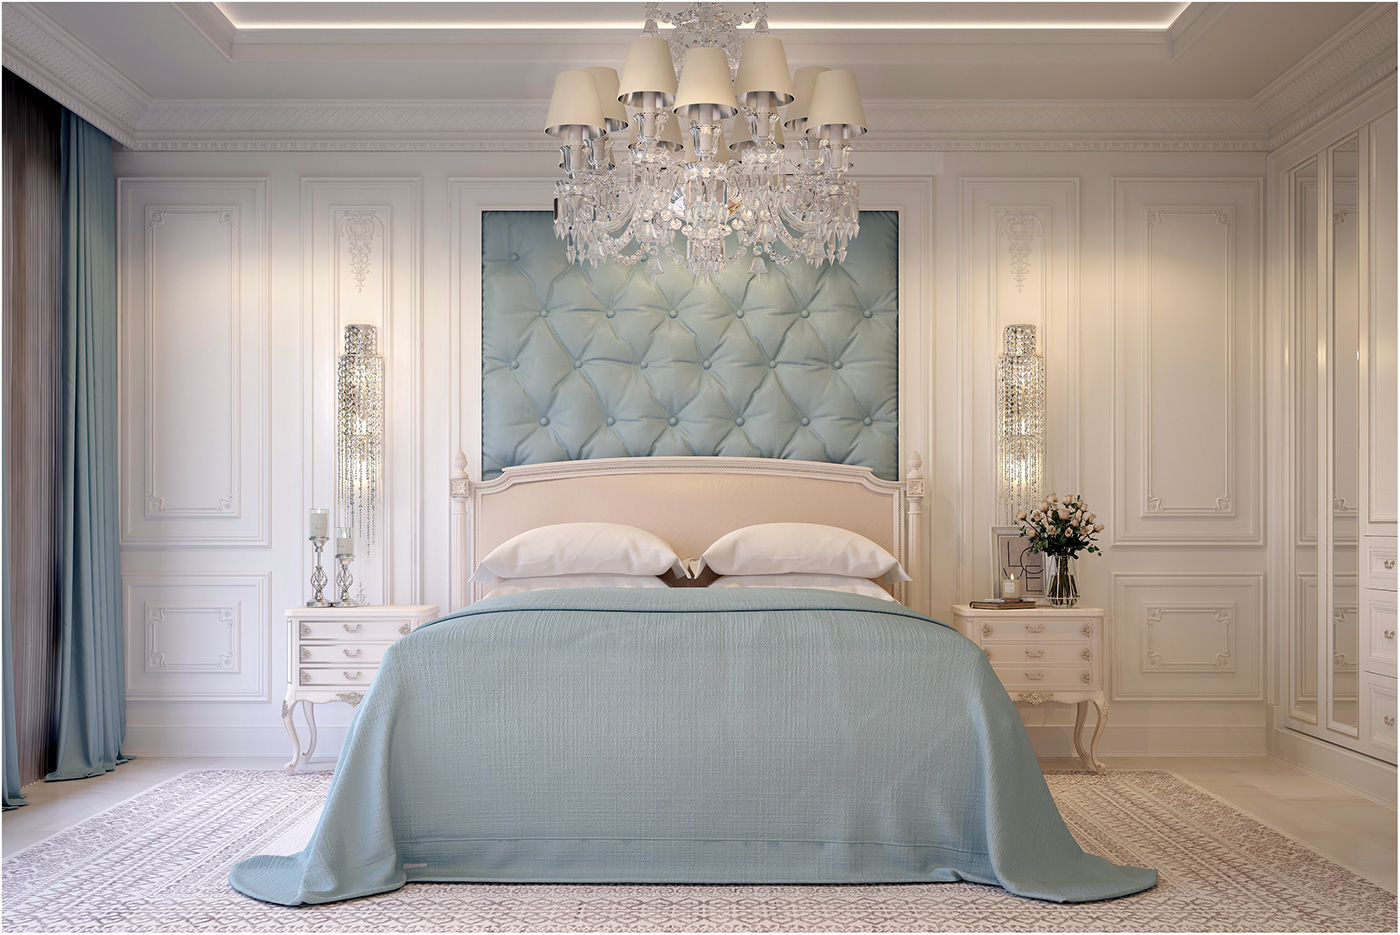 Interior bedroom luxury light vray Classic